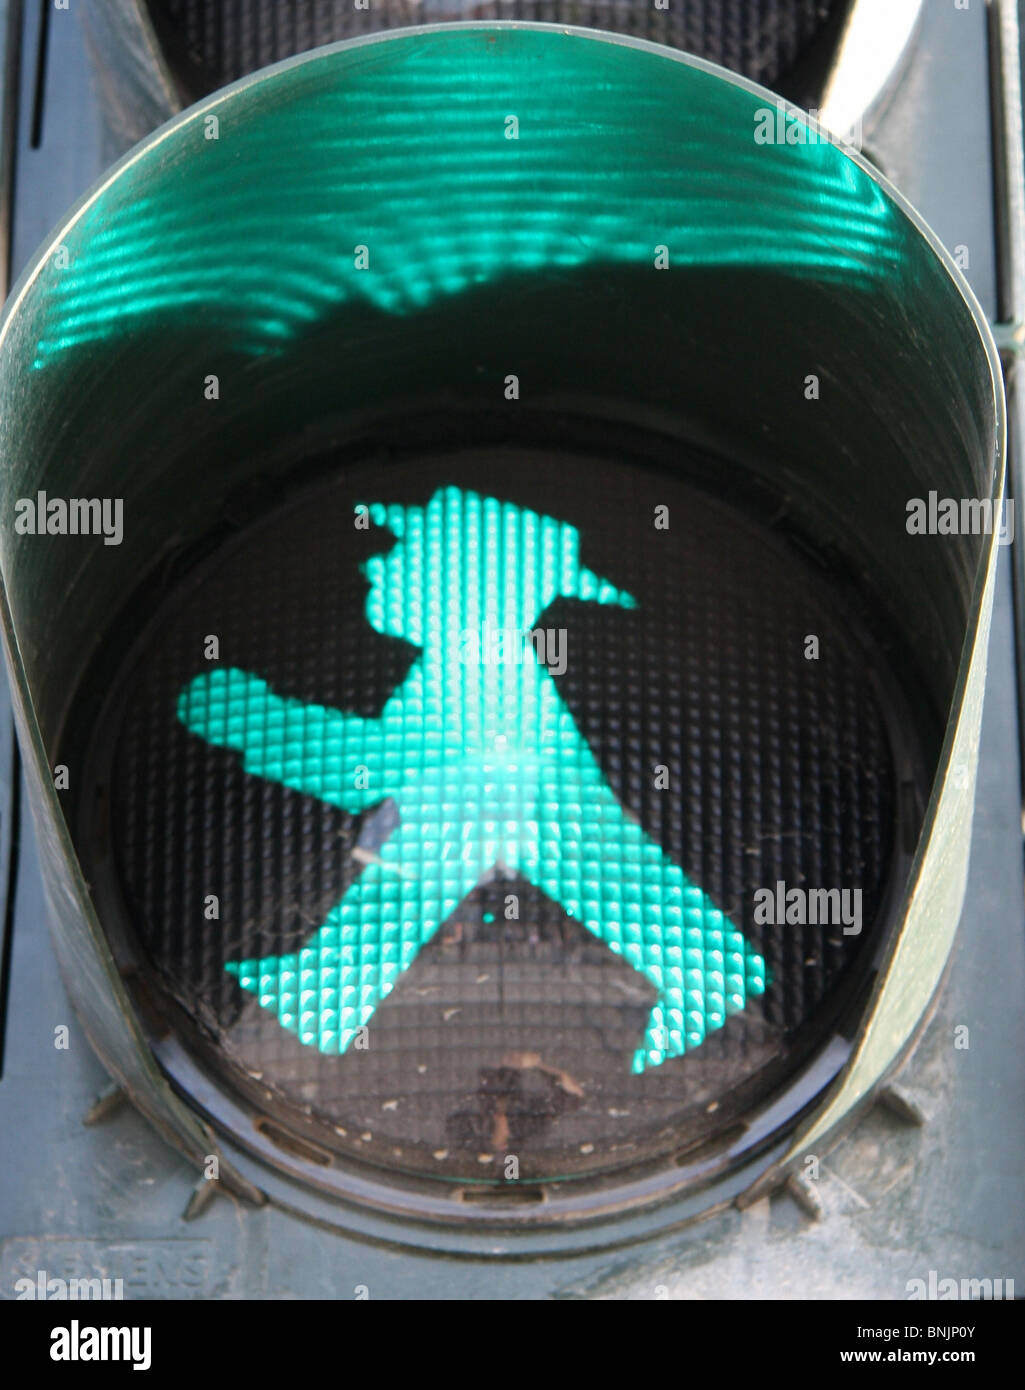 Germany traffic traffic light green traffic light little men signal Stock Photo